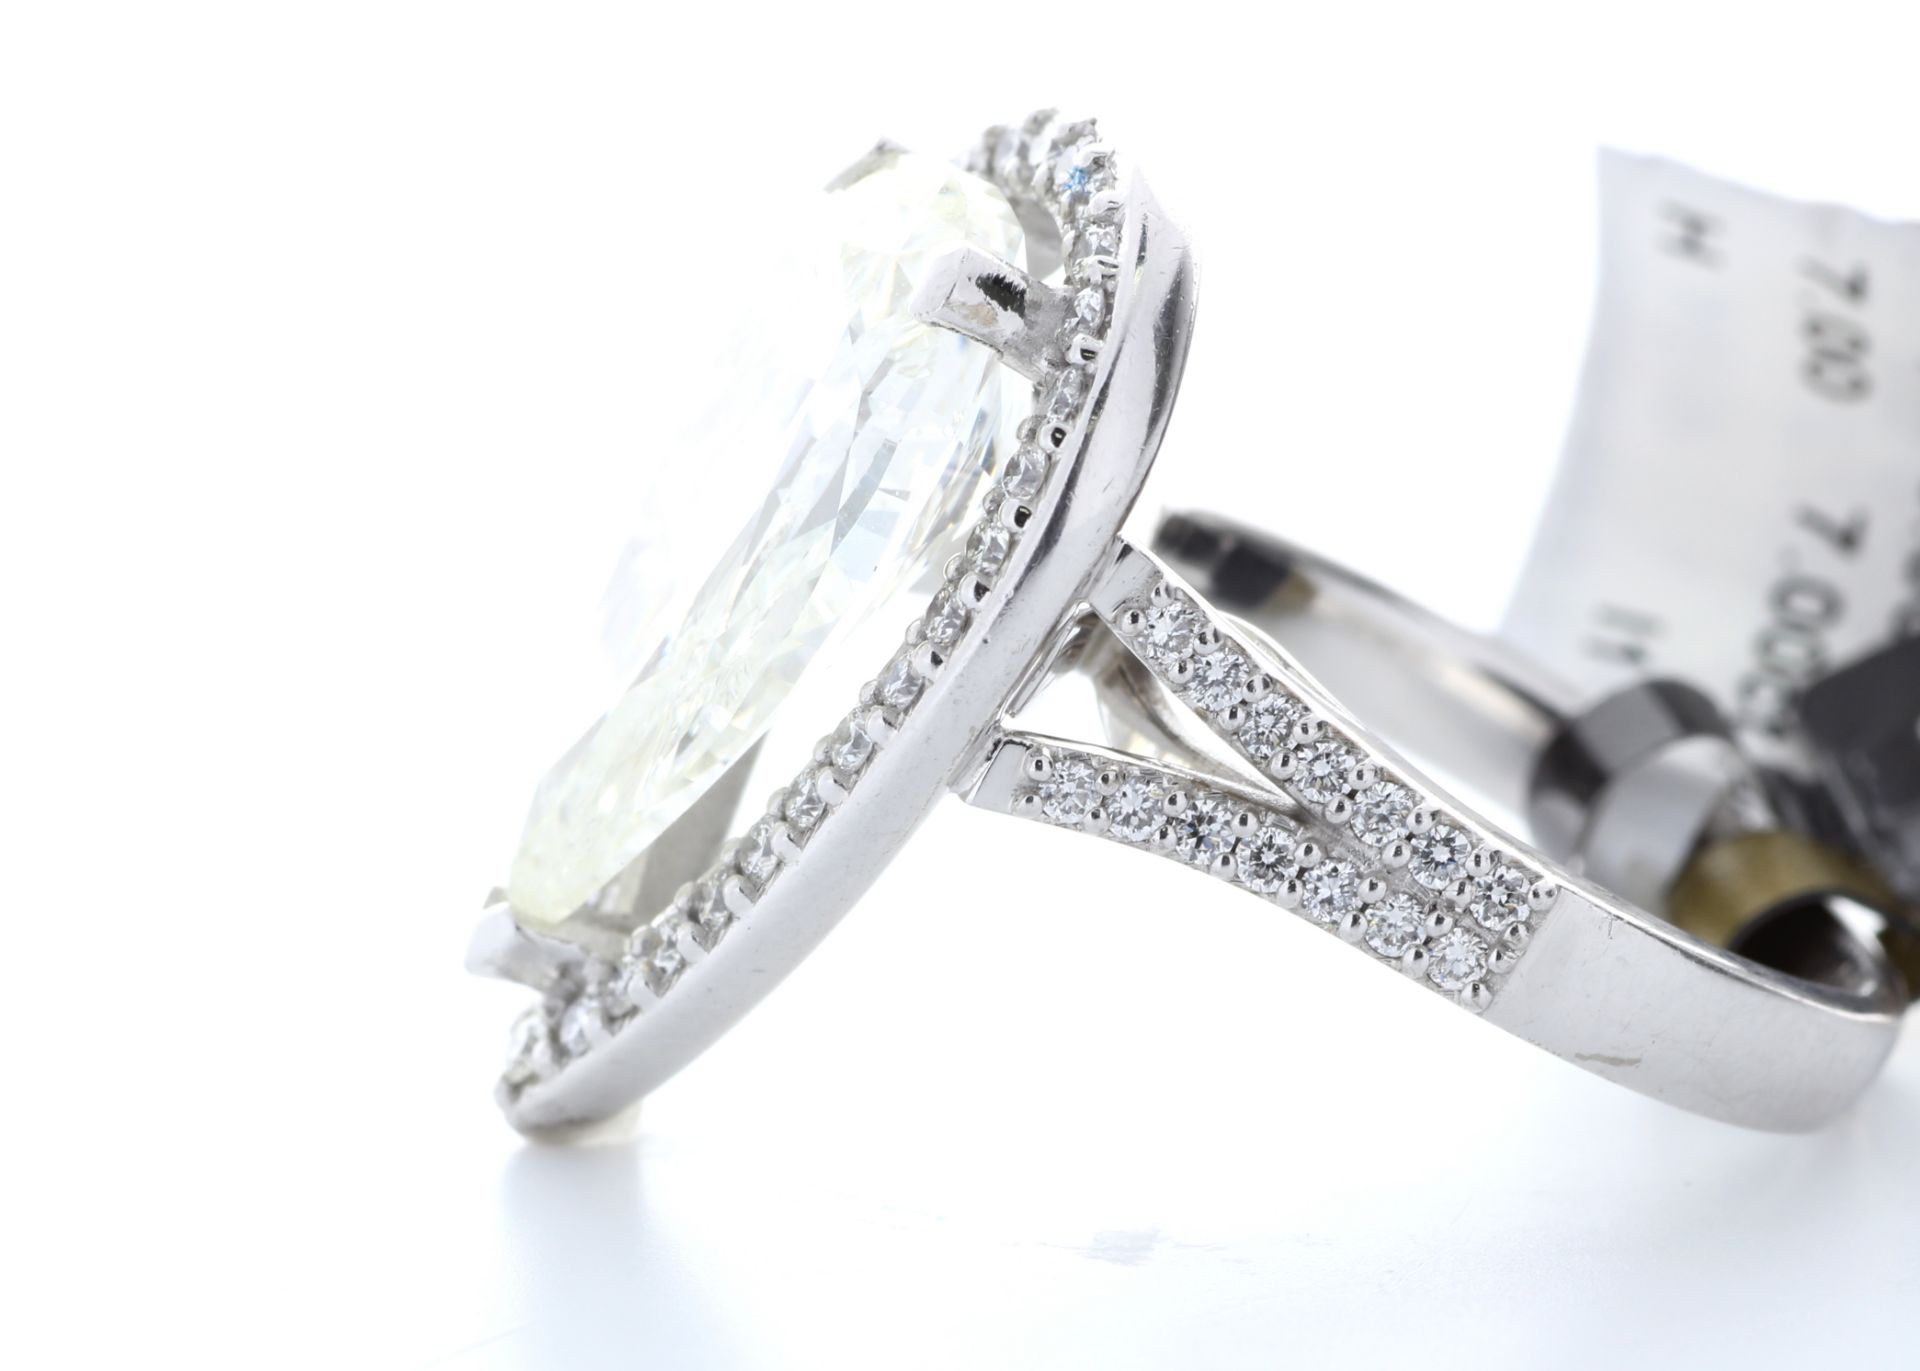 7 Carat Pear Shape Halo Diamond Ring - Image 2 of 3